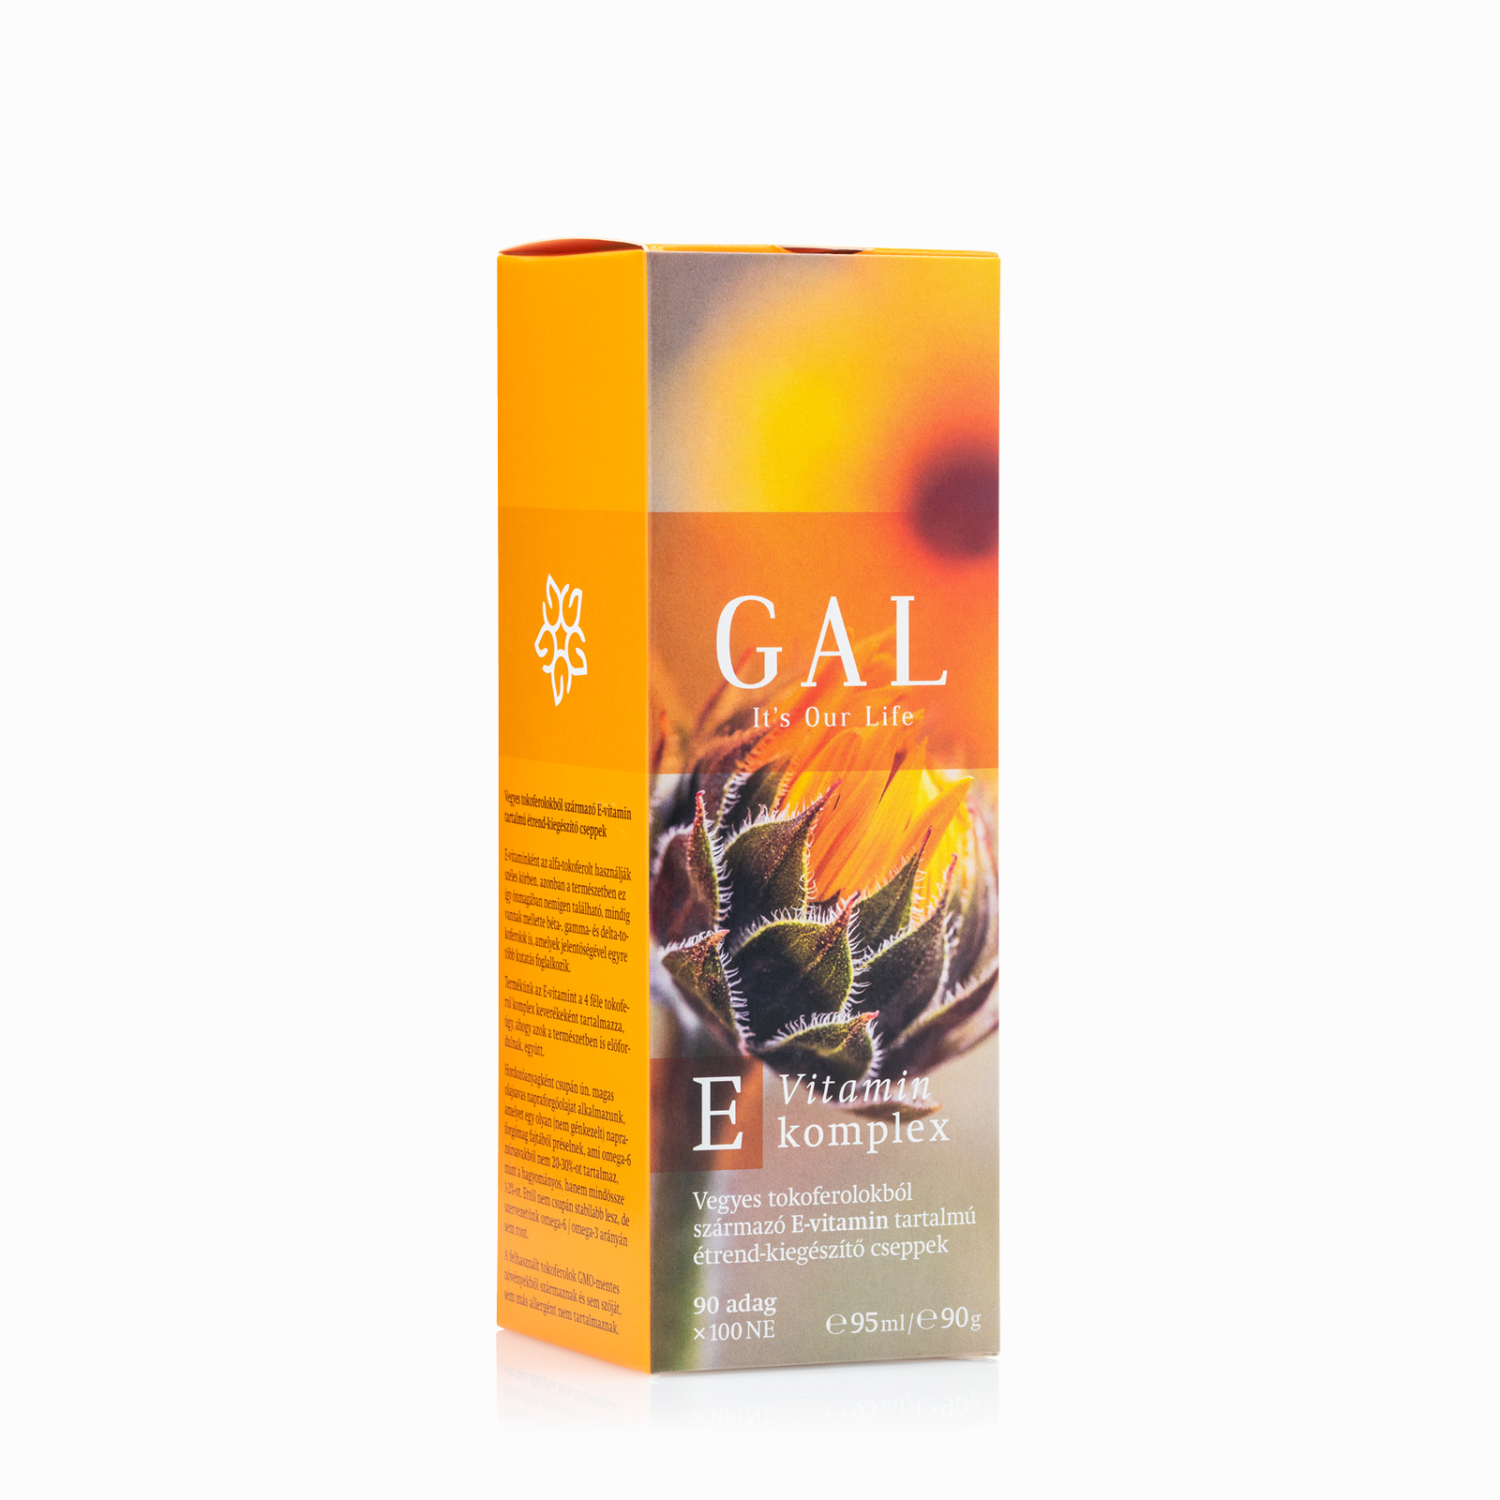 gal-e-vitamin-komplex-aloebeauty